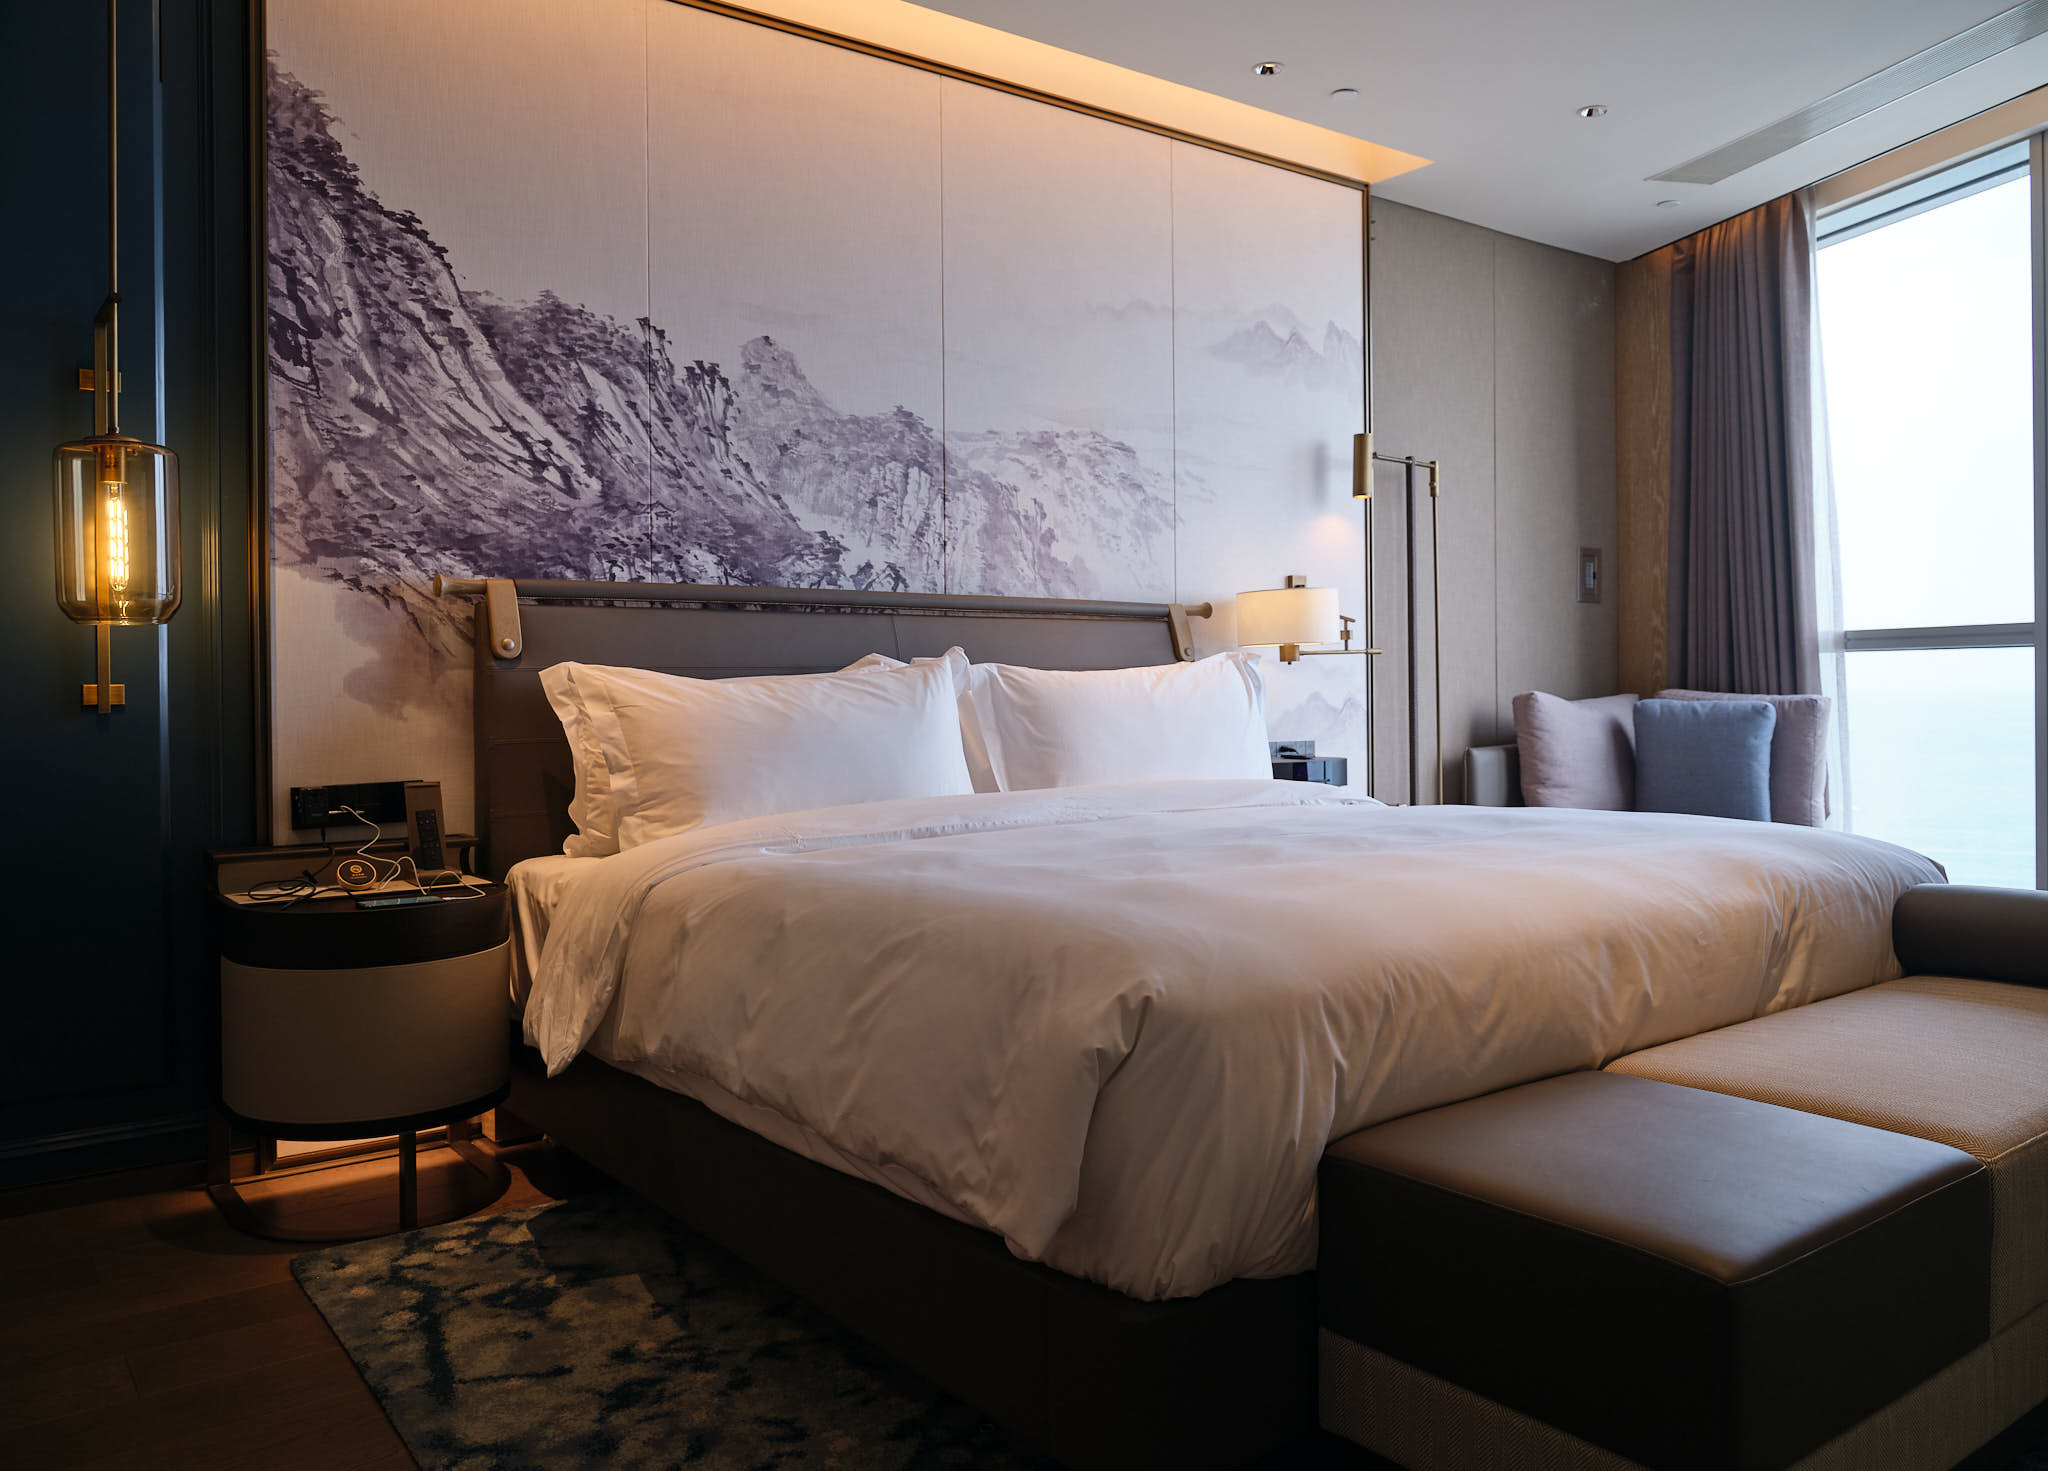 Haitian Hotel suite in Qingdao